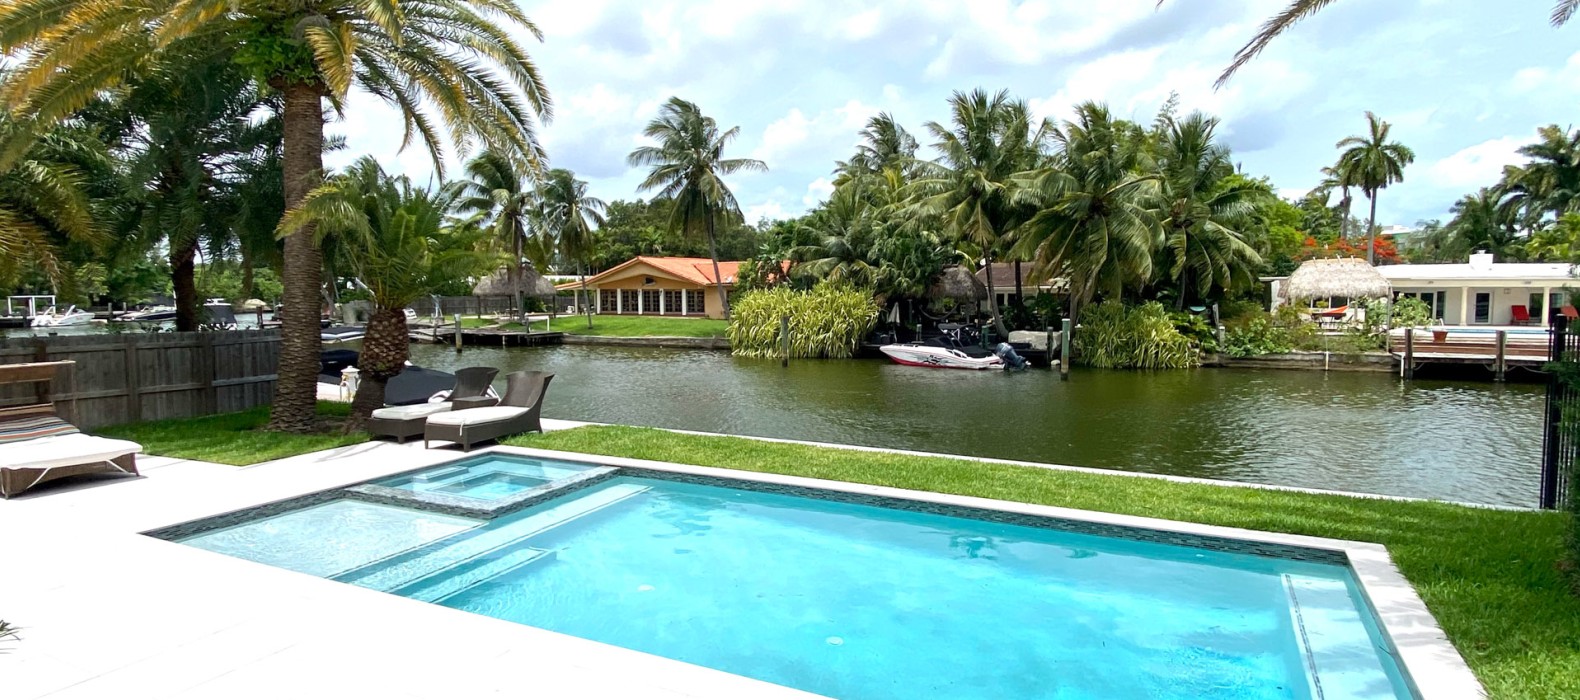 Exterior pool of Villa Alea in Miami